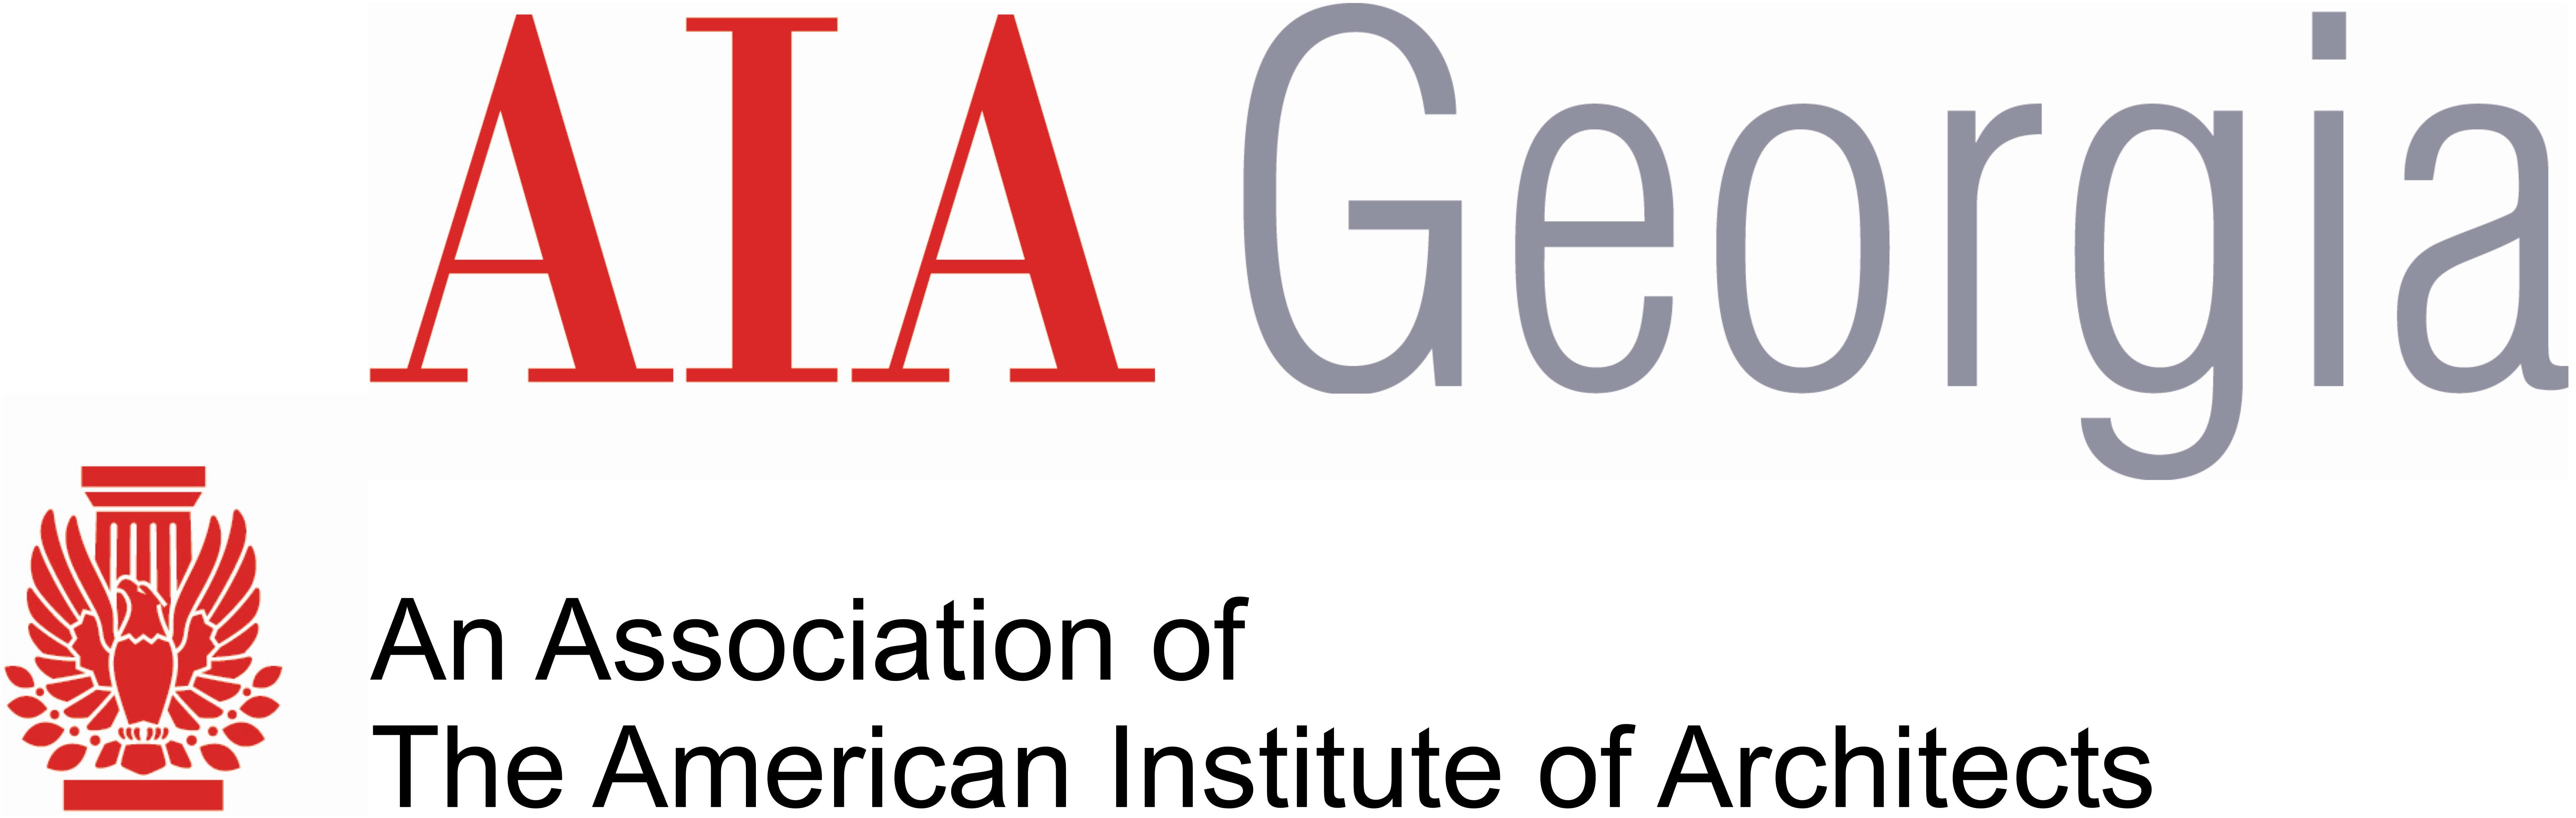 USA Georgia Logo - Soka Gakkai International. USA Buddhist Center - AIA